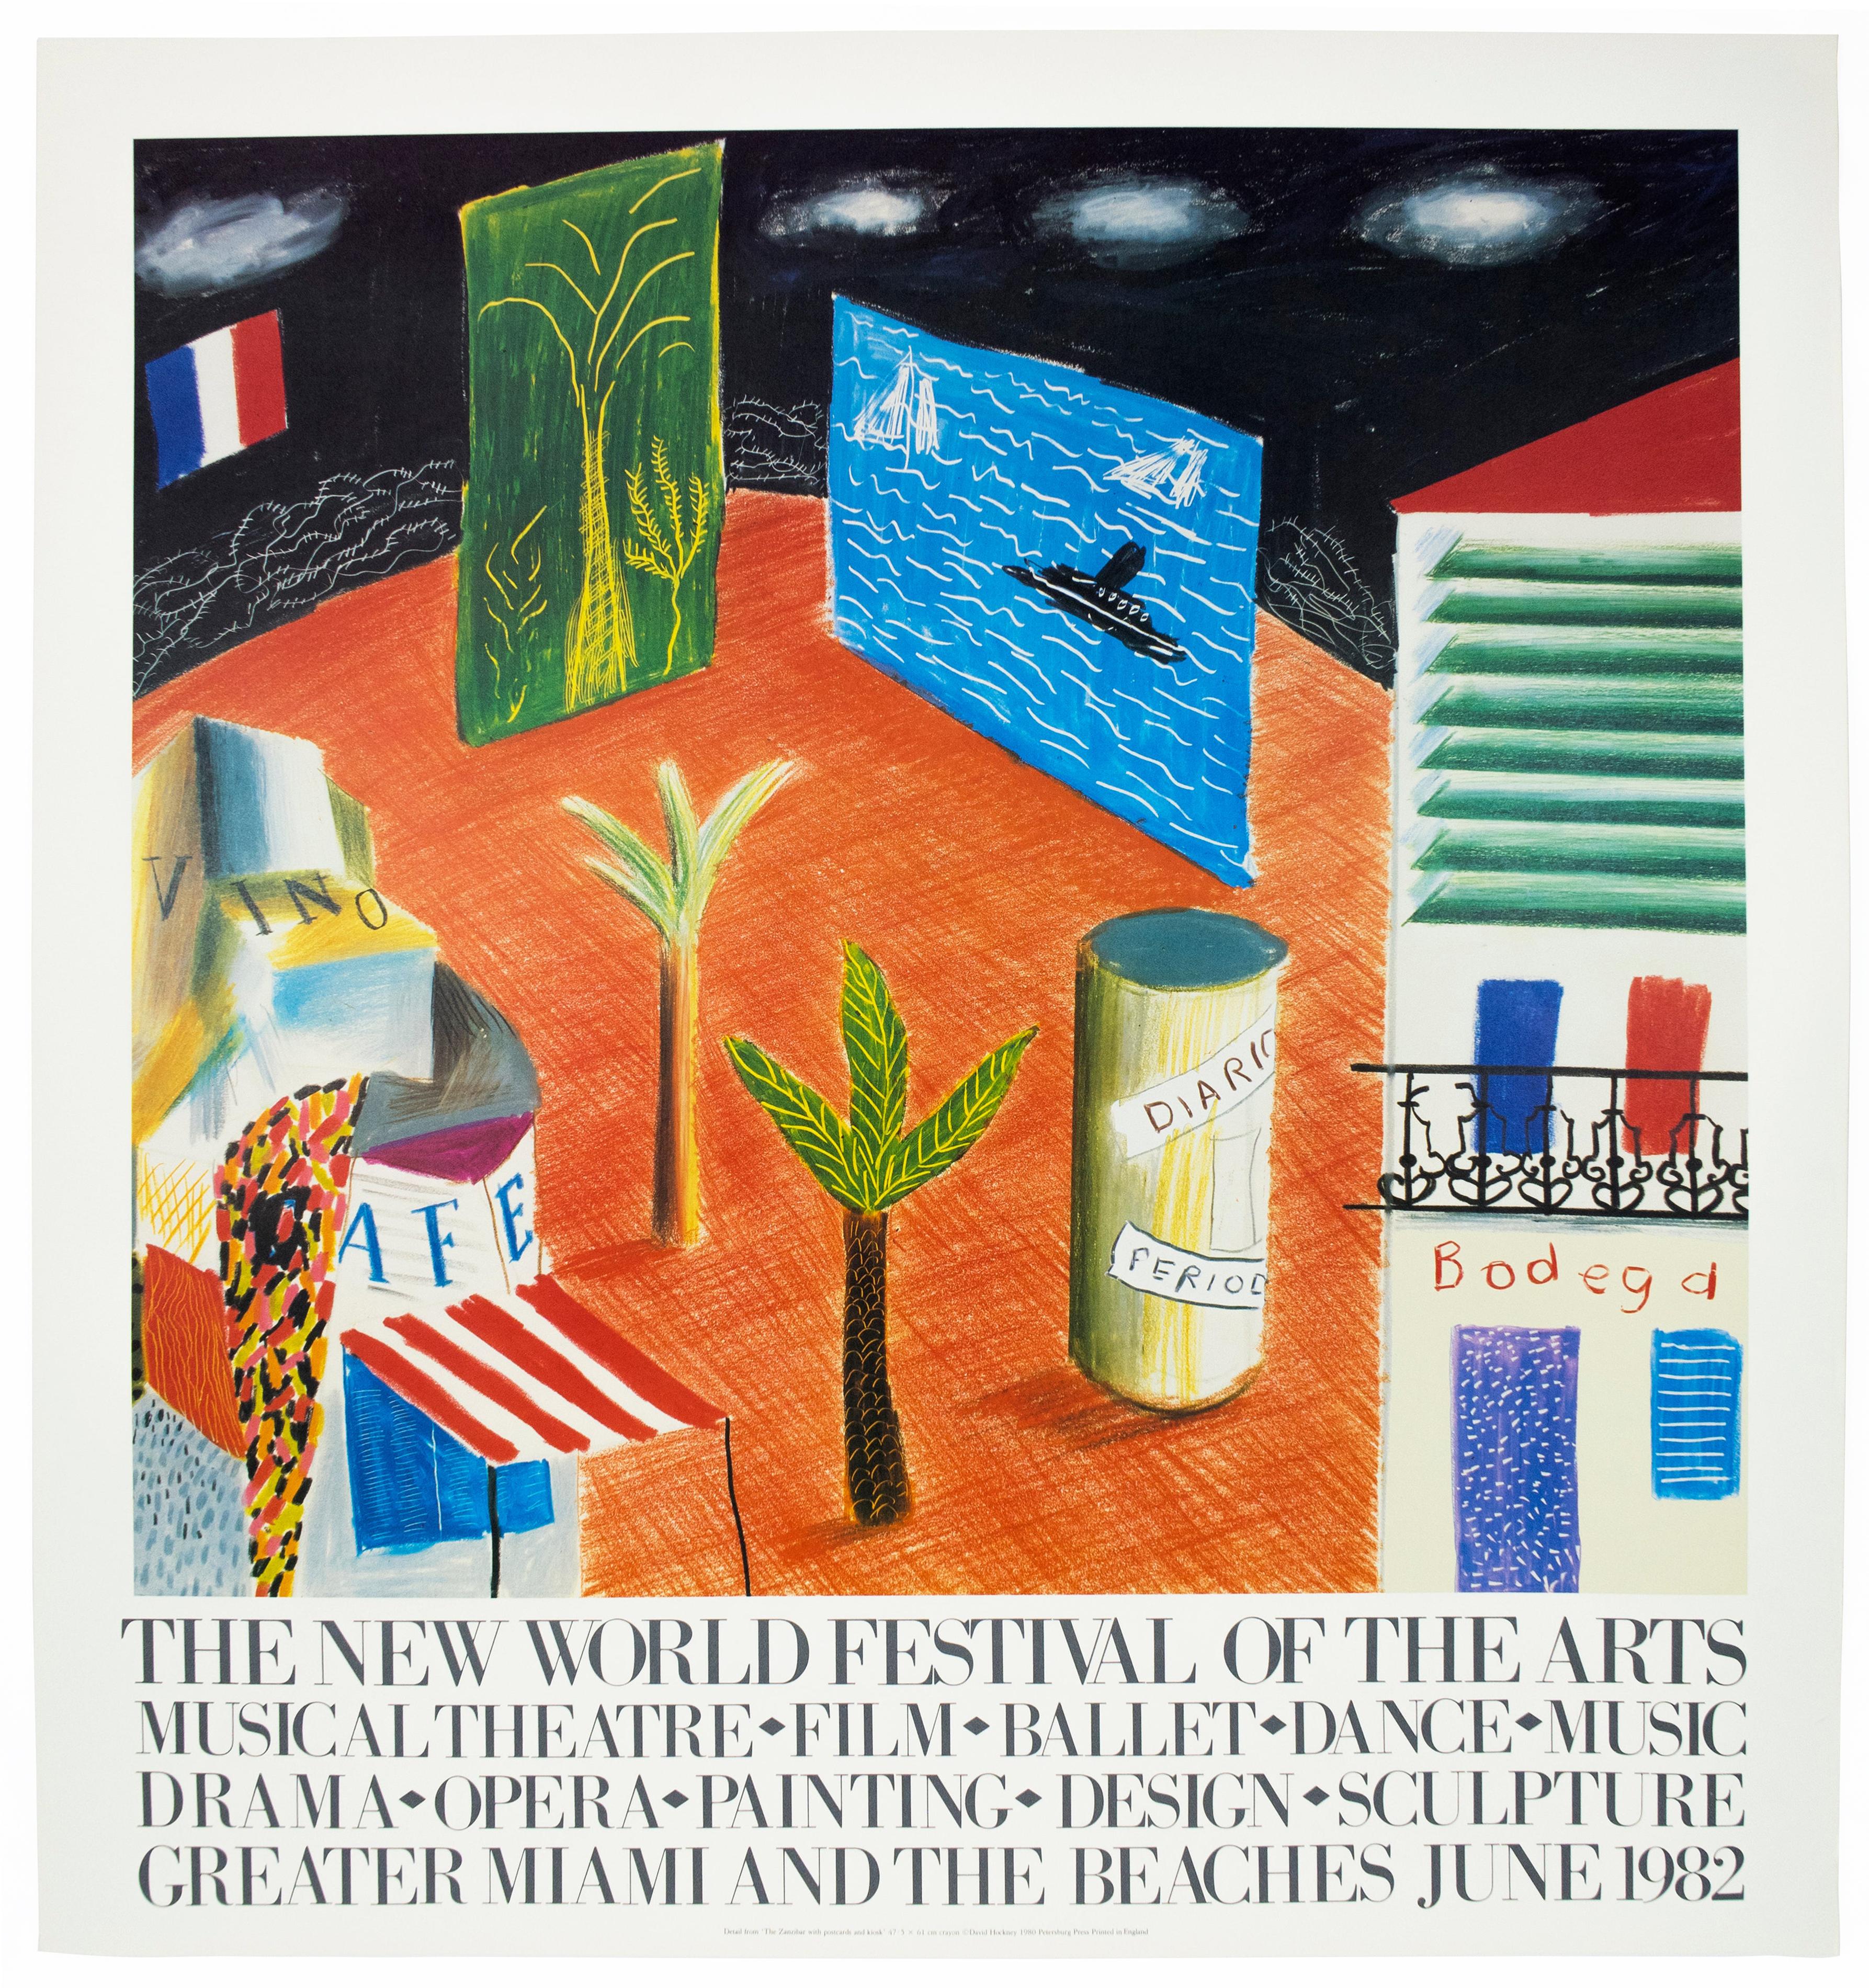 David Hockney 1982 San Francisco Opera  Mini Poster Authorised Repro.14x10" C53